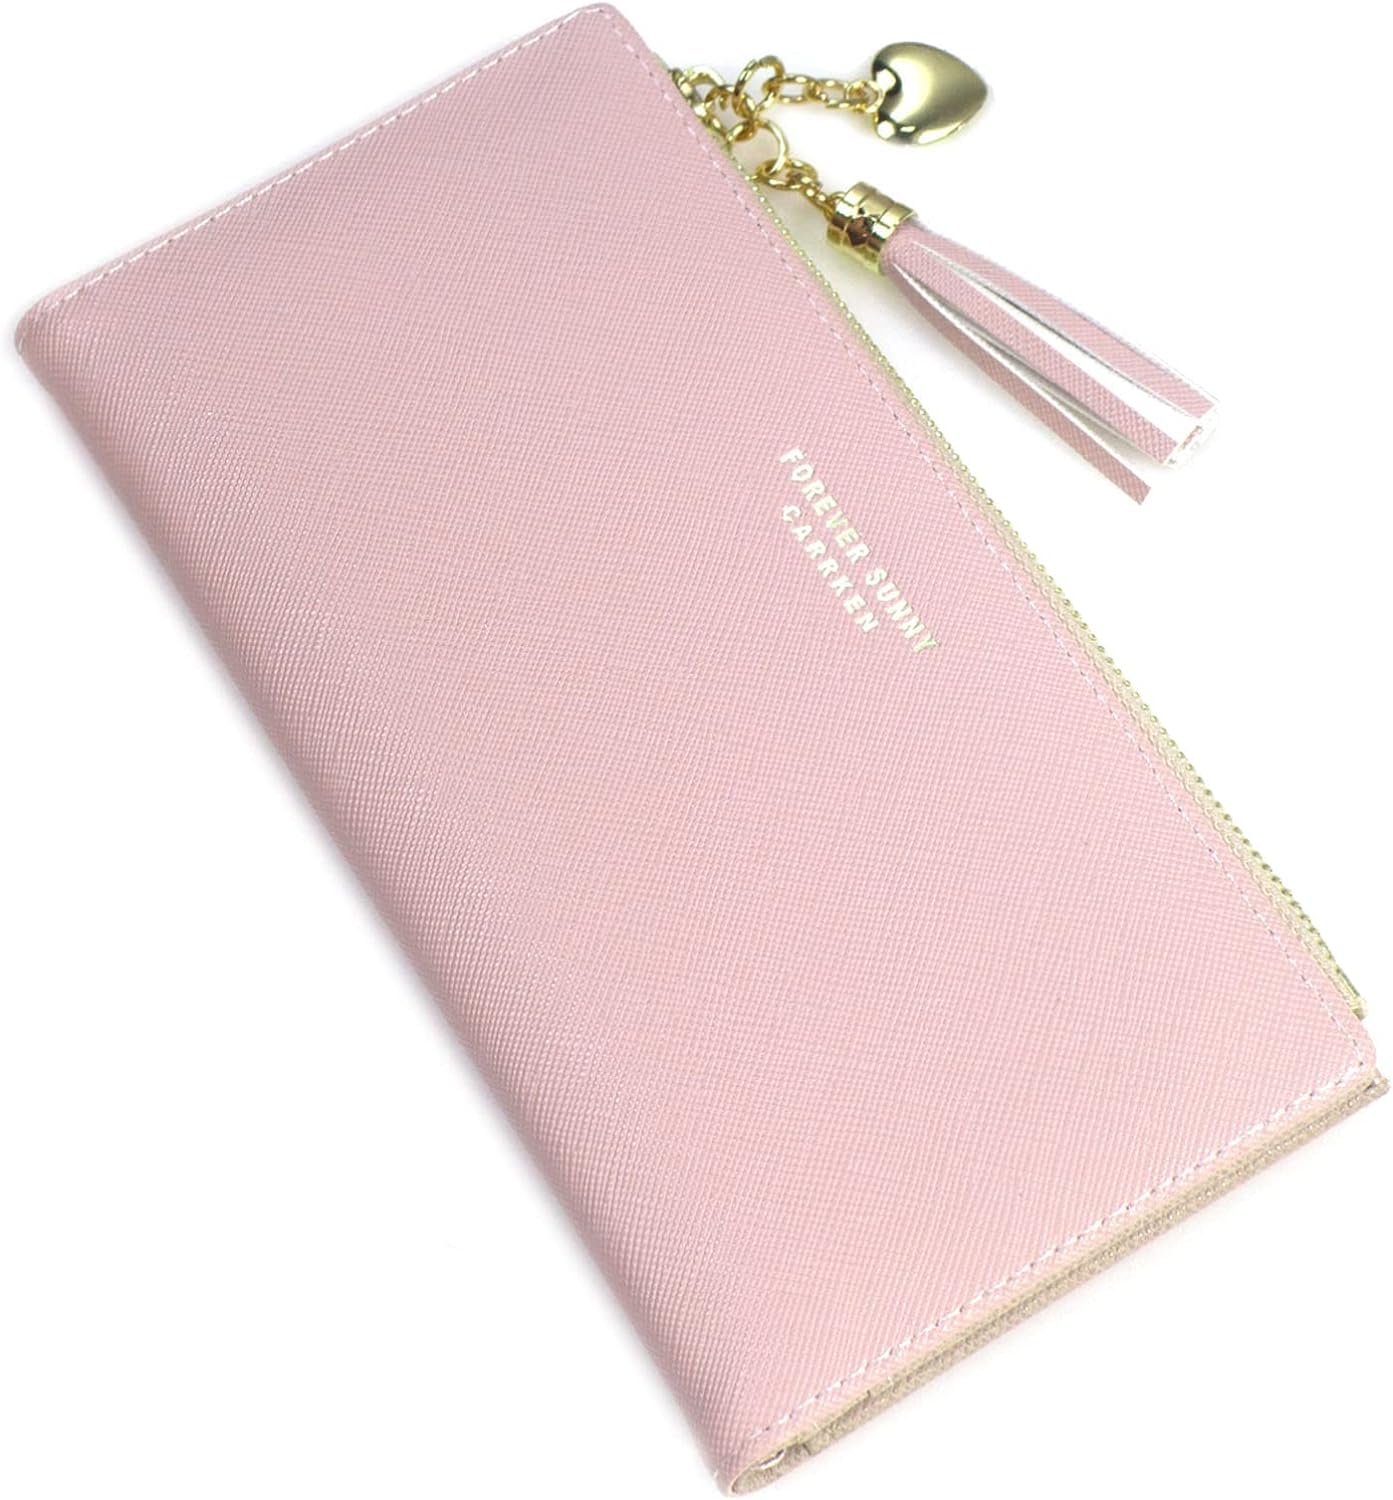 SUMGOGO Wallets for Women Slim Clutch Purse Handbag Card Holder Review